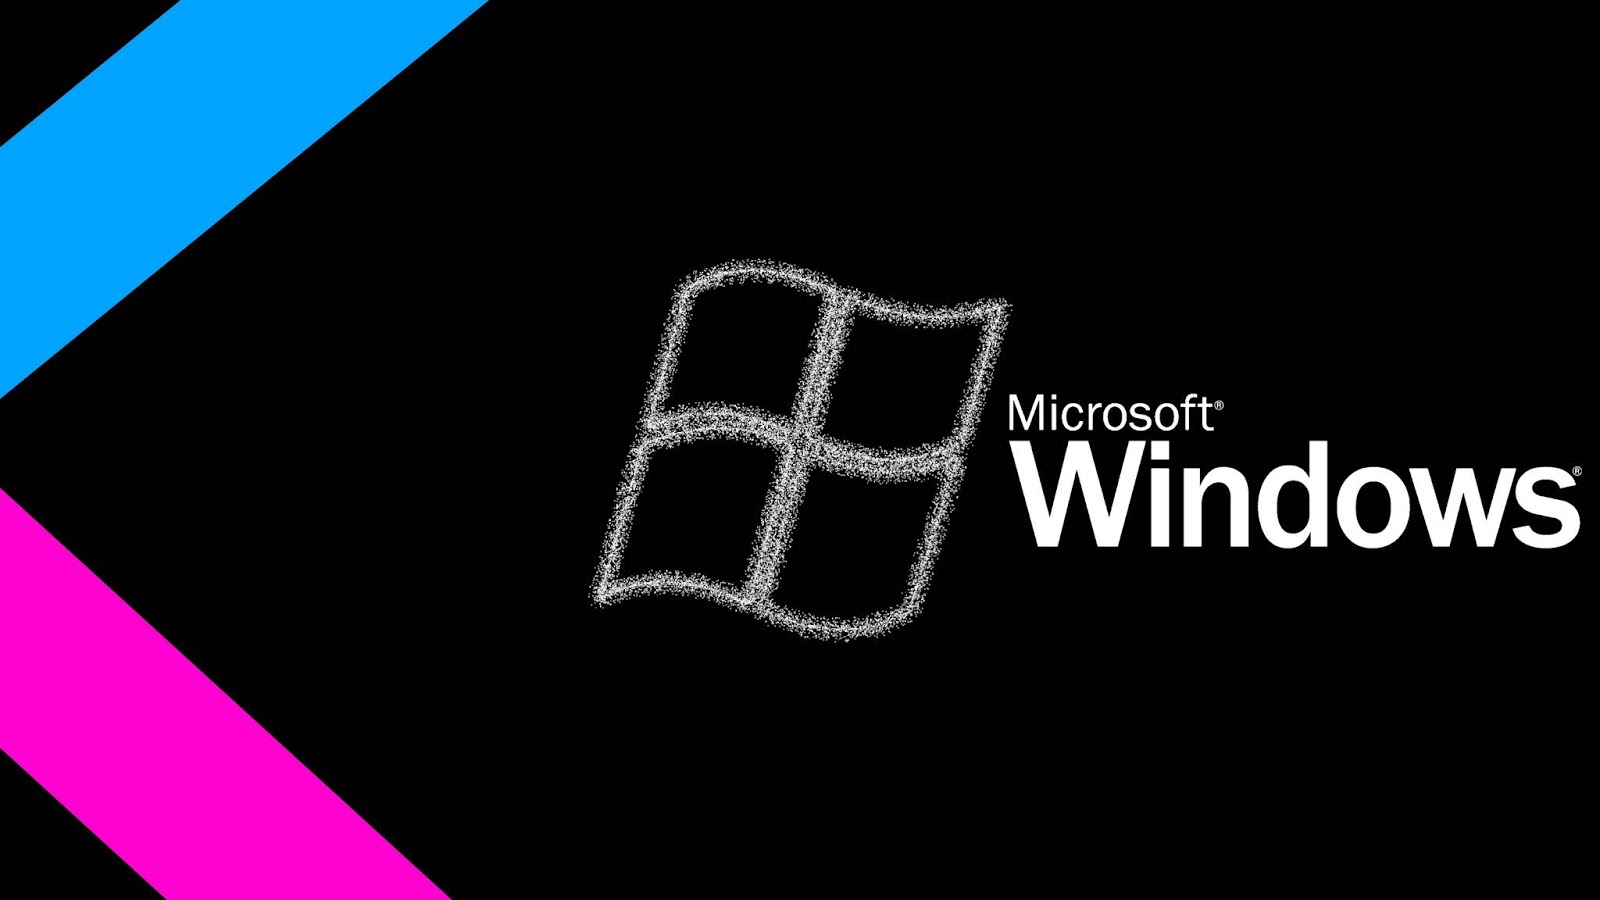 Windows- Hera@mh.com